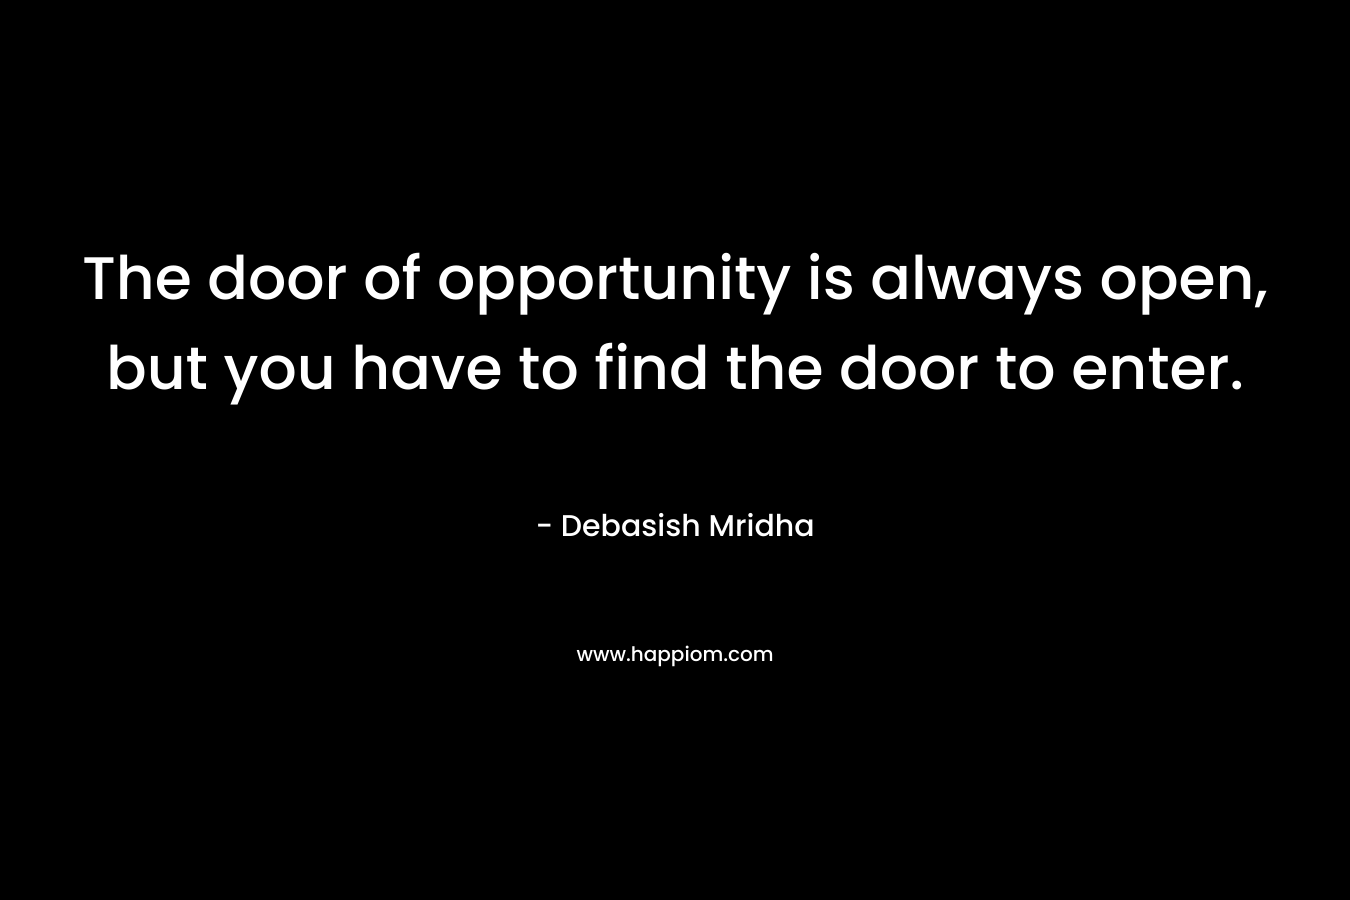 The door of opportunity is always open, but you have to find the door to enter.